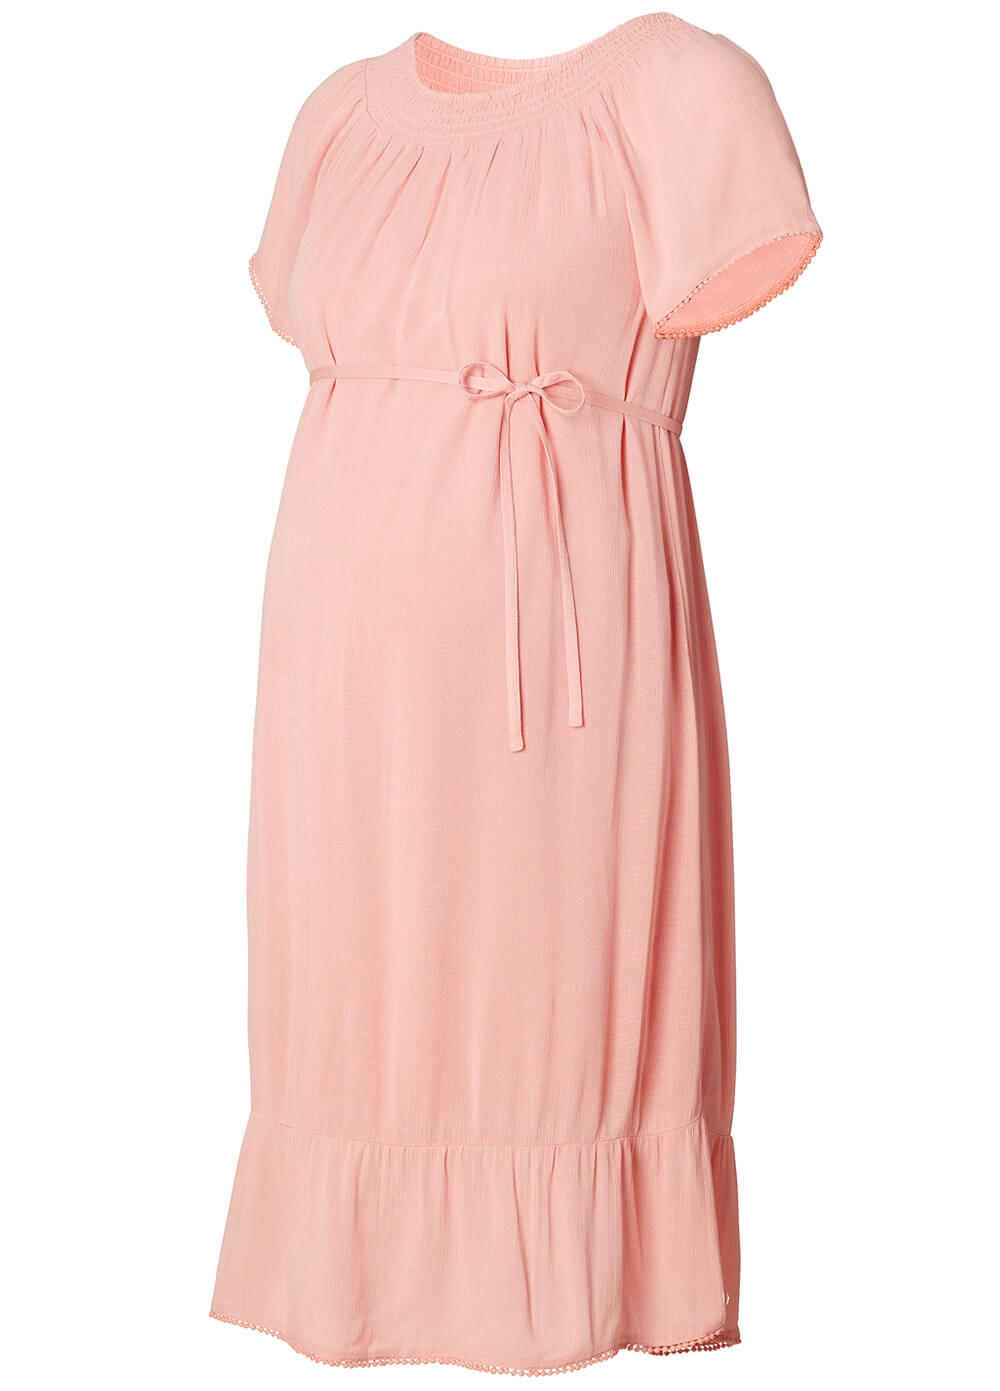 Flowing Flounce Hem Maternity Dress in Rose by Esprit